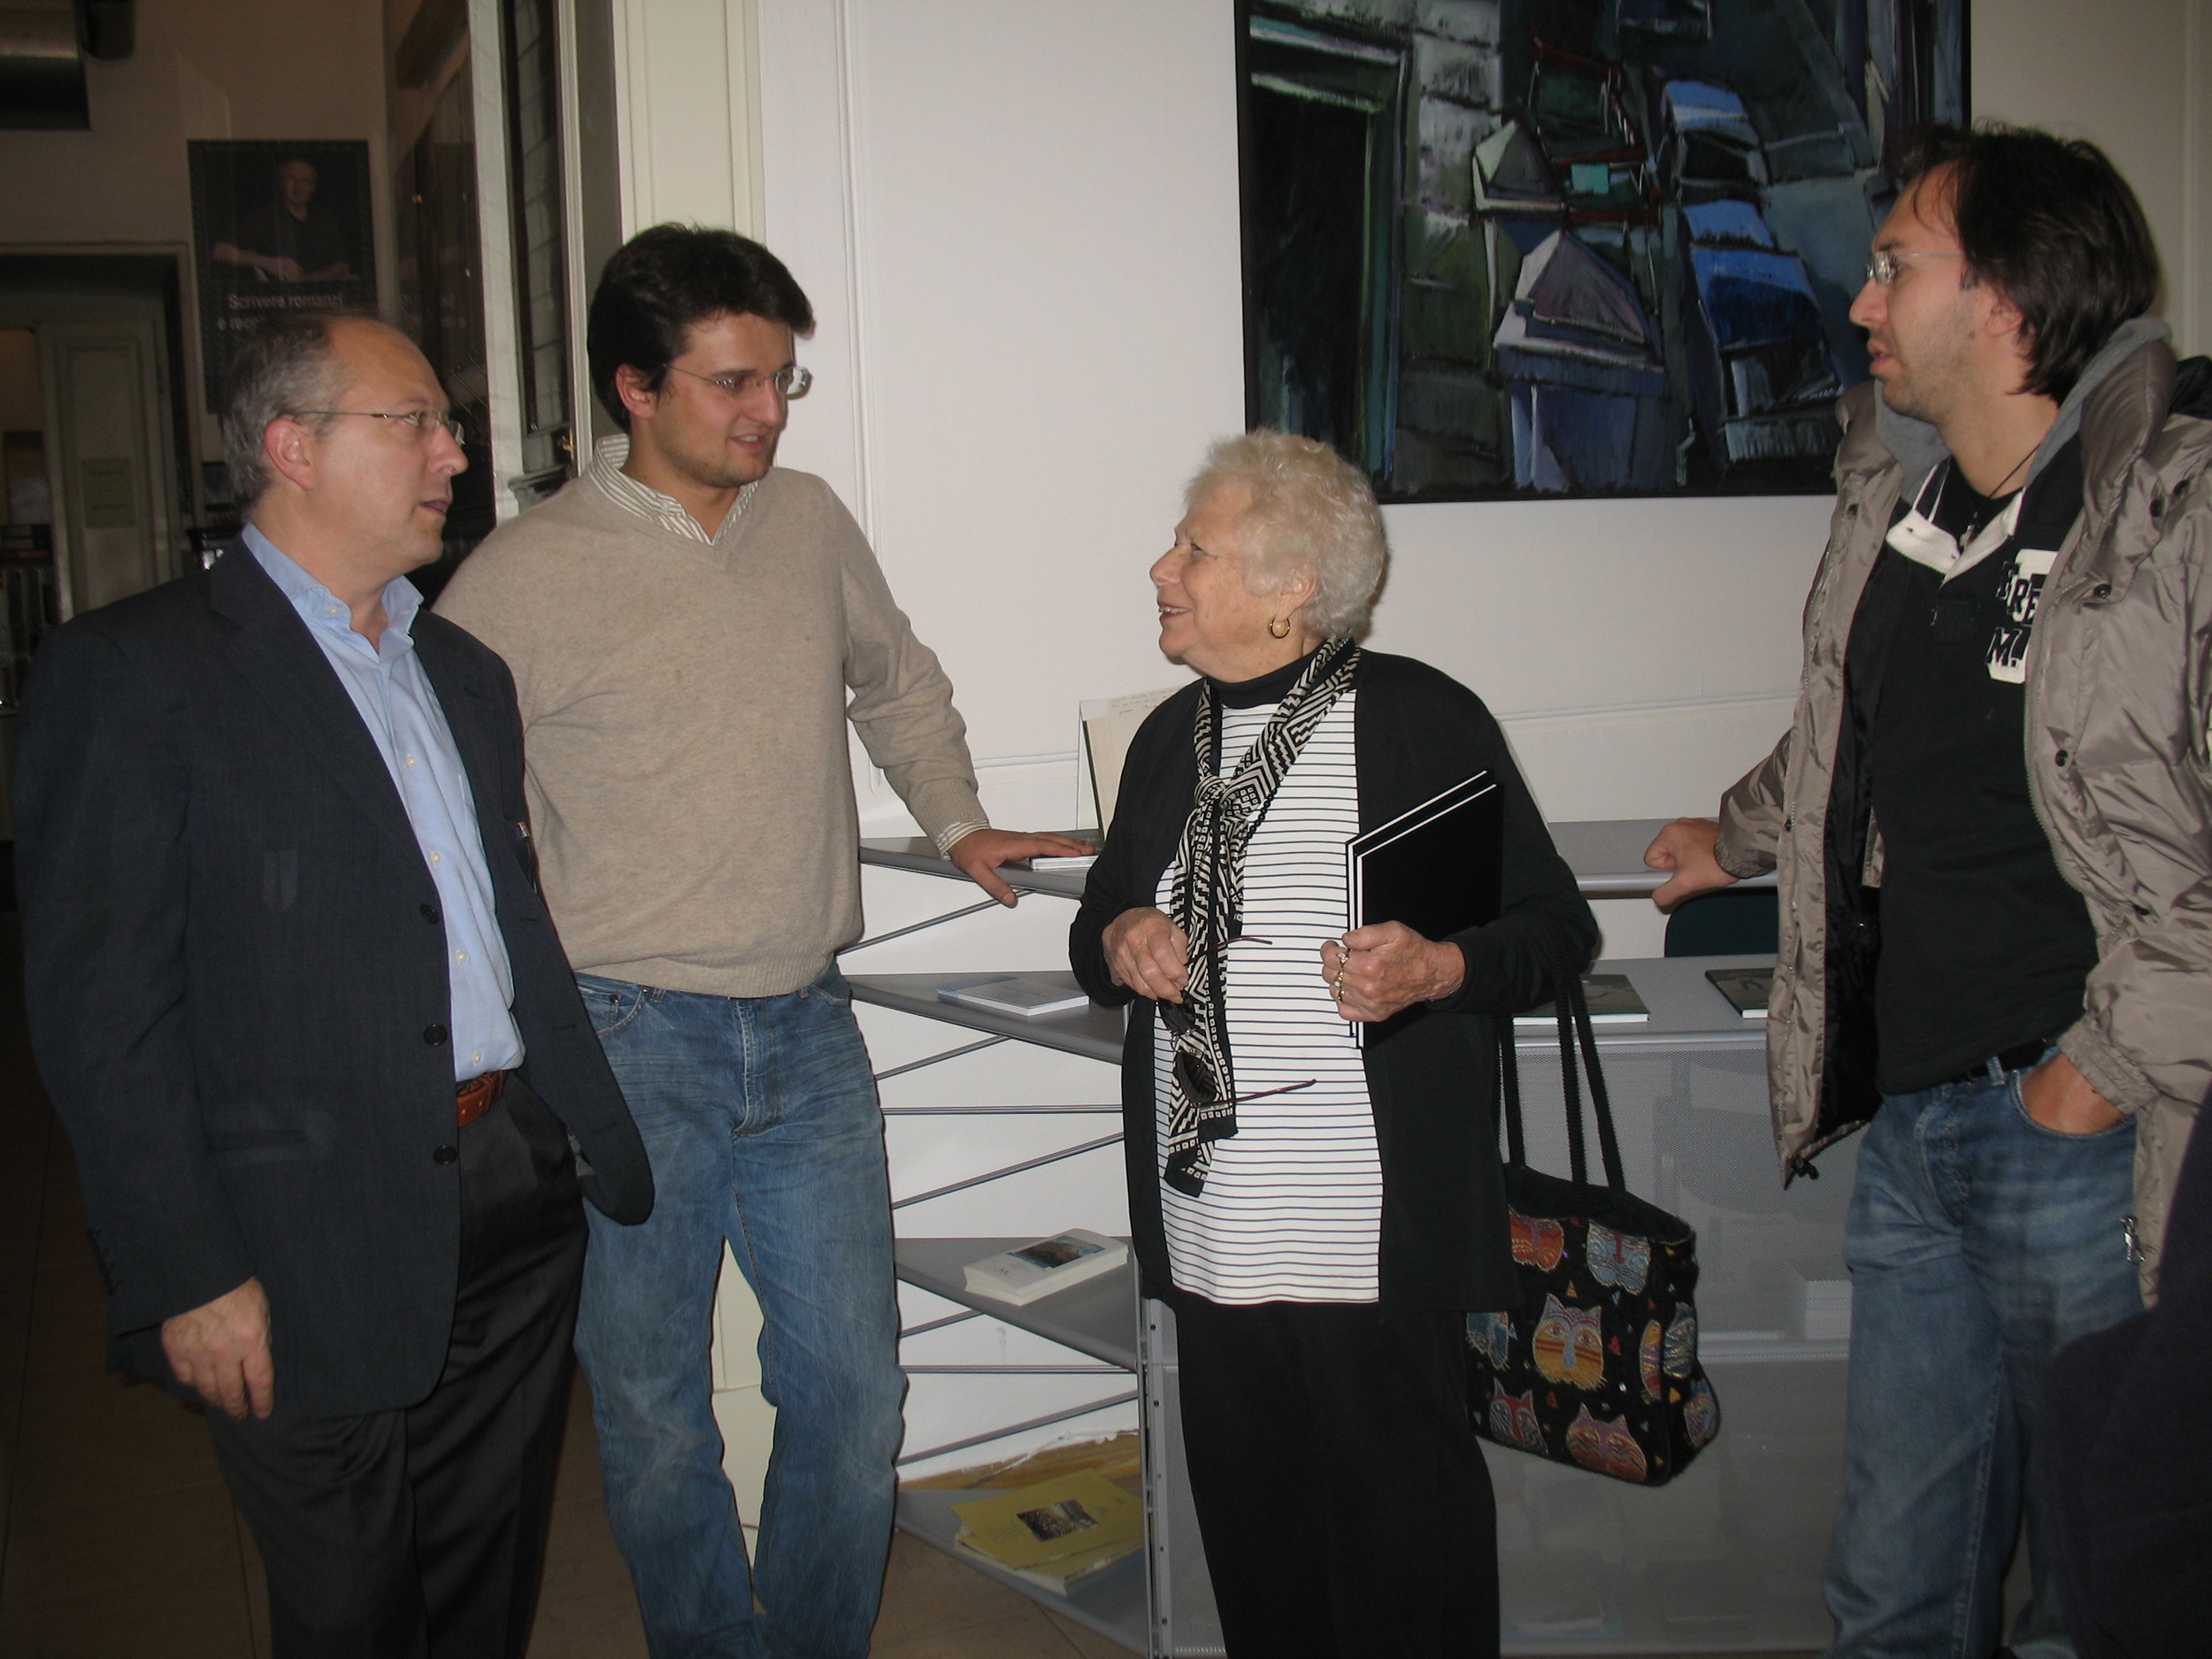 Naomi Rosenblum with Camillo Fornasieri and Photographer, Pierpaolo Mittica